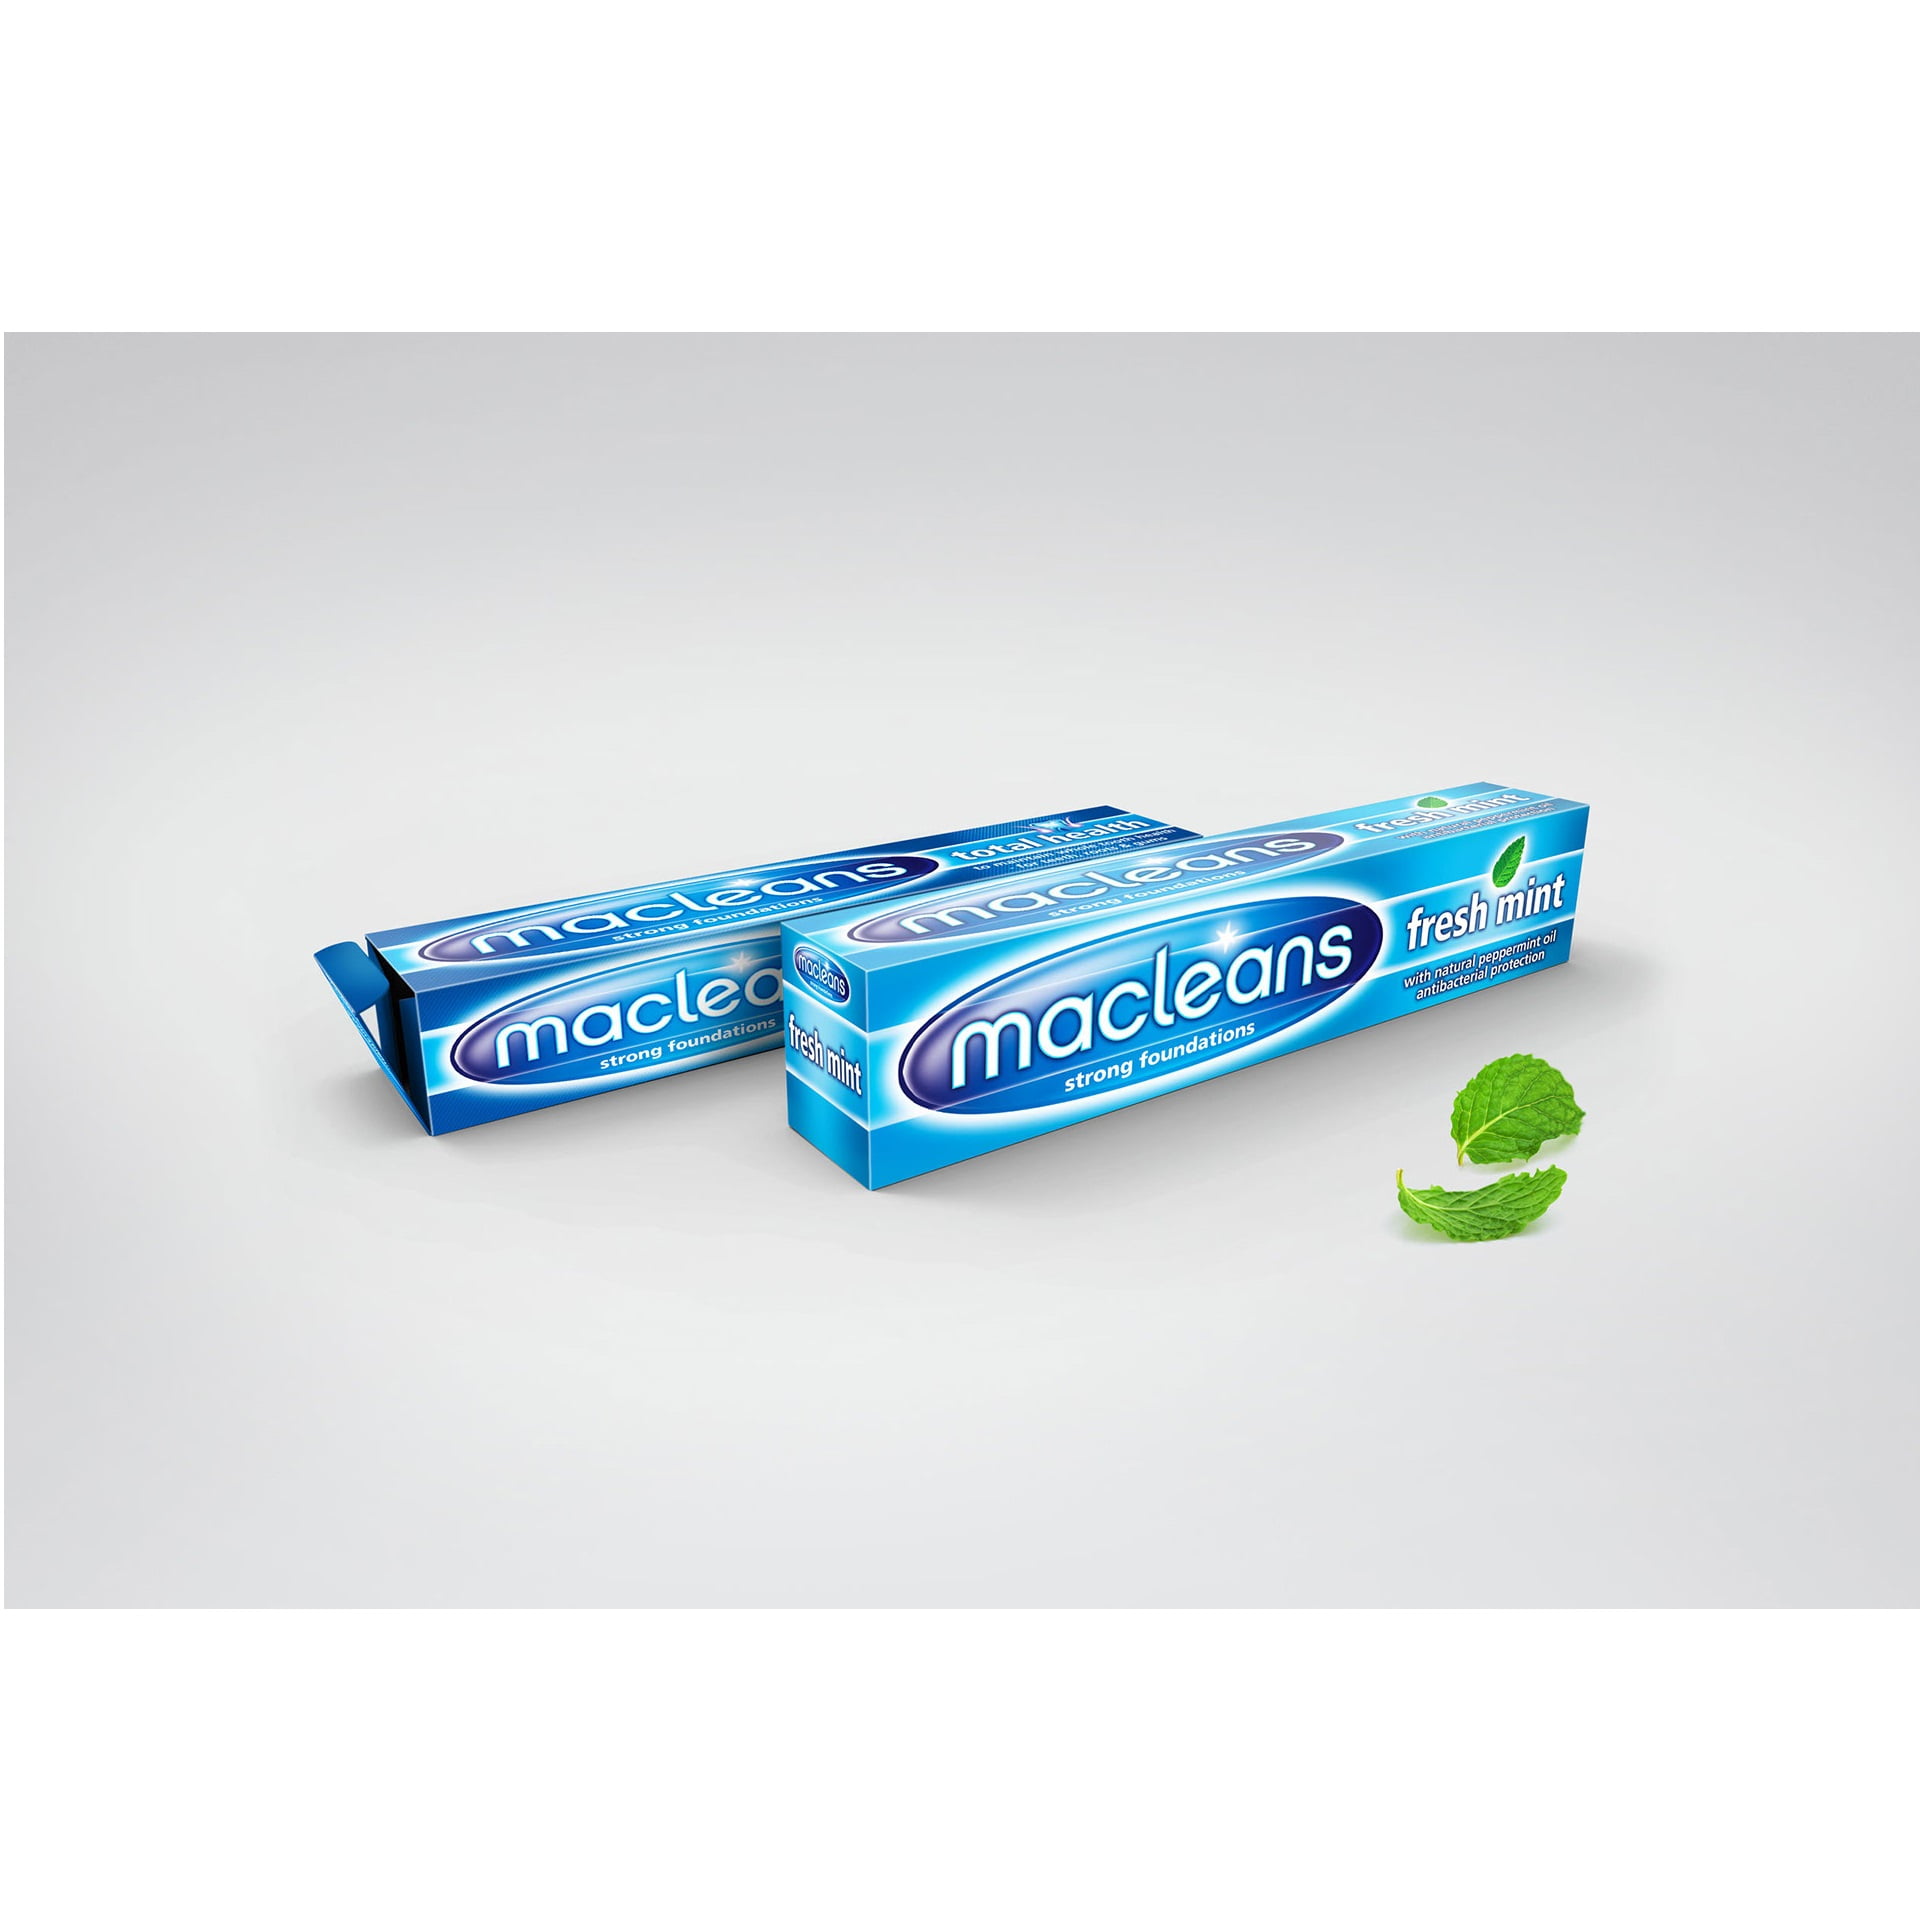 Macleans Toothpaste Freshmint 125ml (Pack of 2) Walmart.com